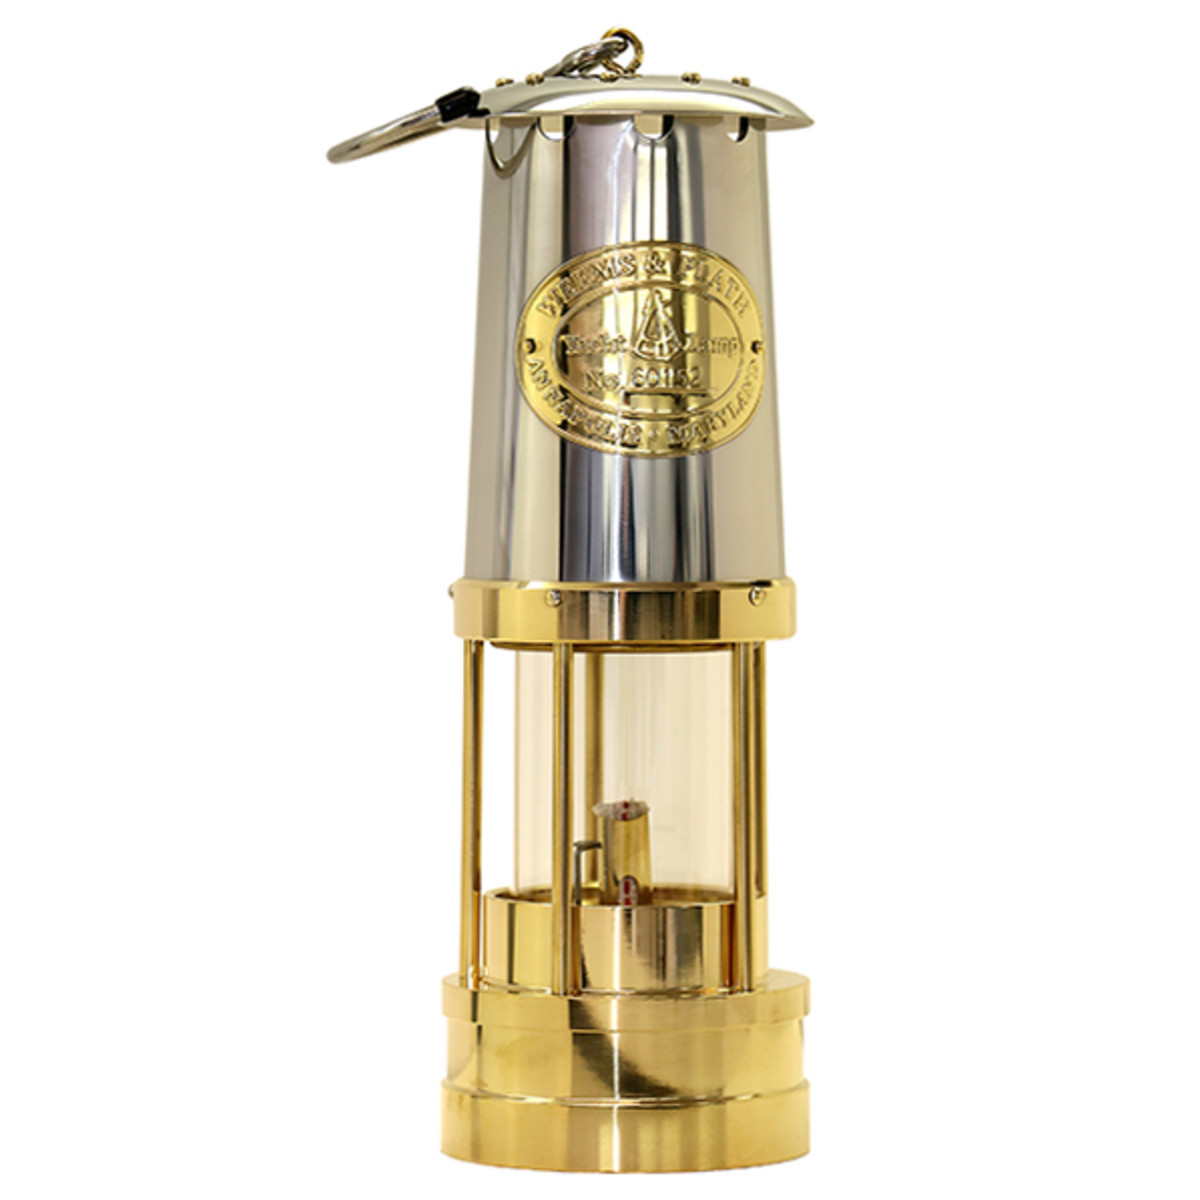 Weems & Plath Brass Yacht Lamp, $208.